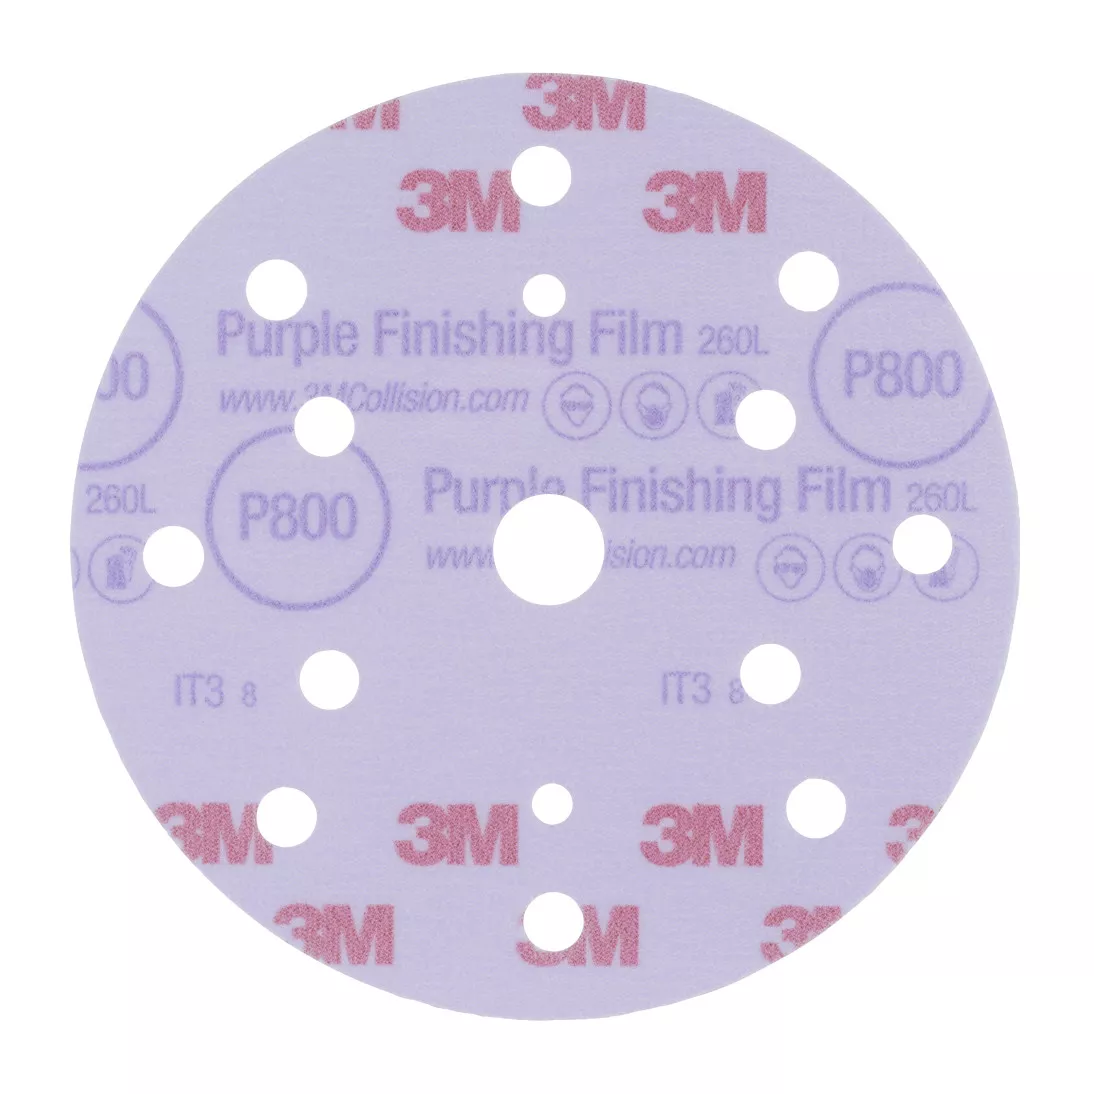 3M™ Purple Finishing Film Hookit™ 260L Disc Dust-Free, 51155, 6
in, P800, 50 discs per carton, 4 cartons per case